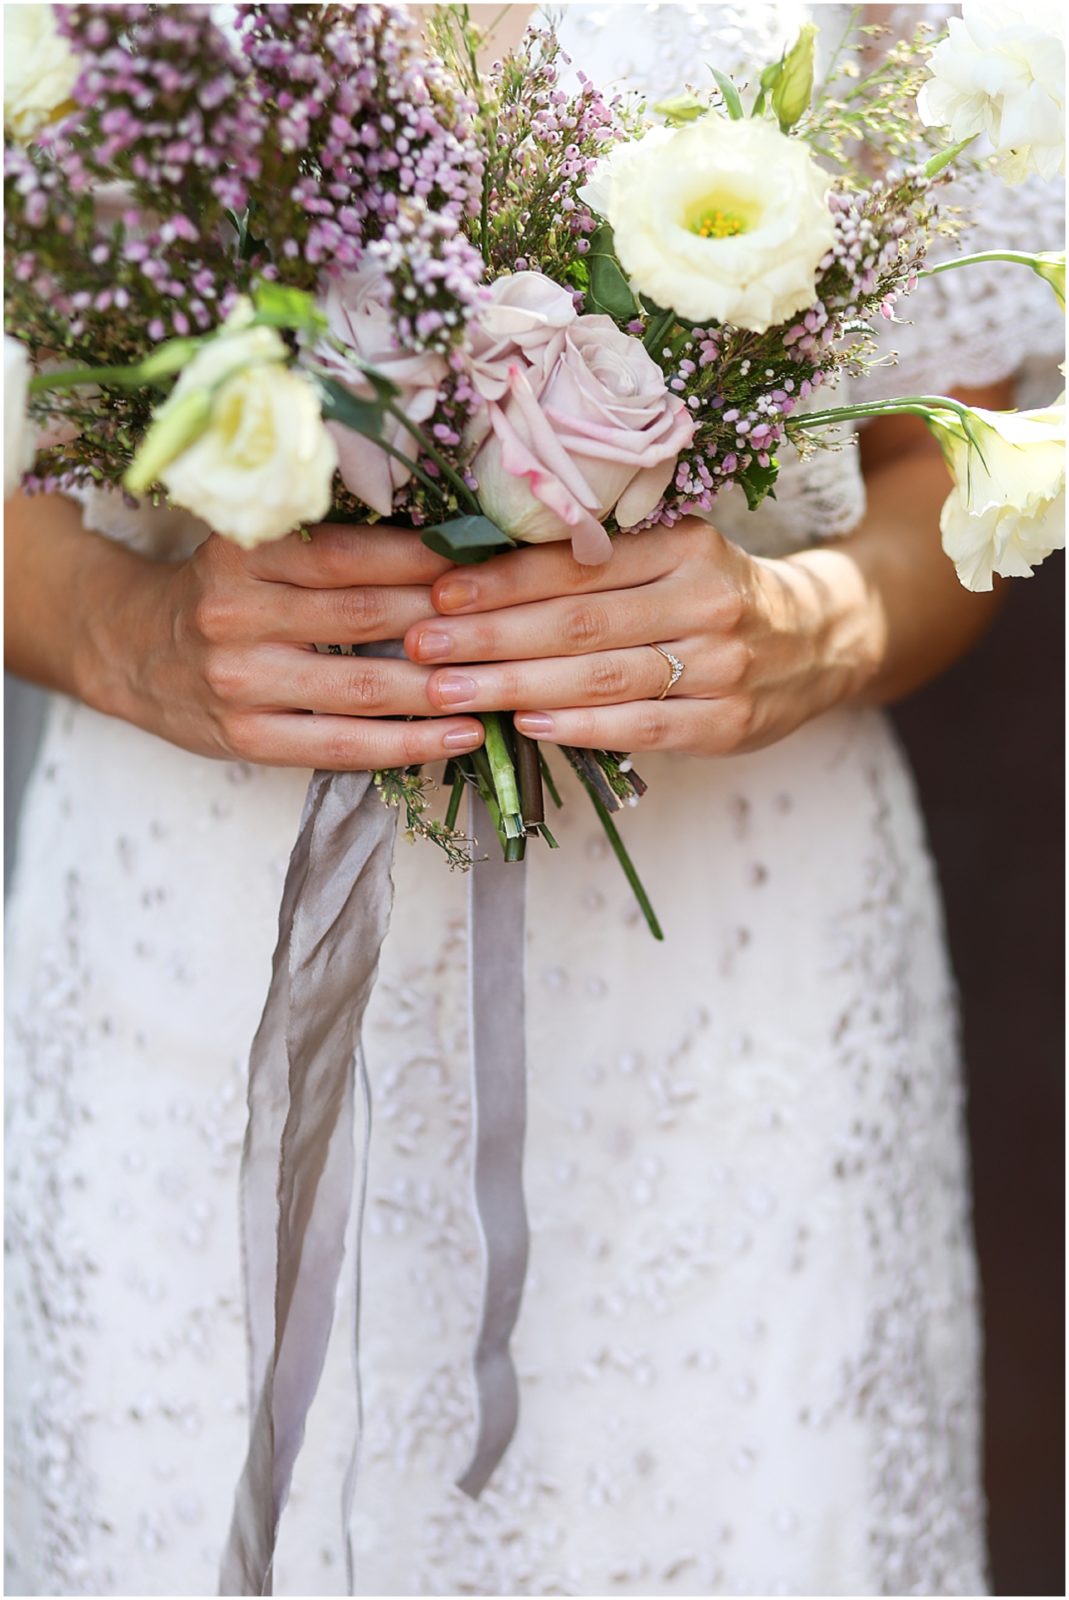 LACE WEDDING DRESS AT FEASTS OF FANCY - WEDDING FLOWERS